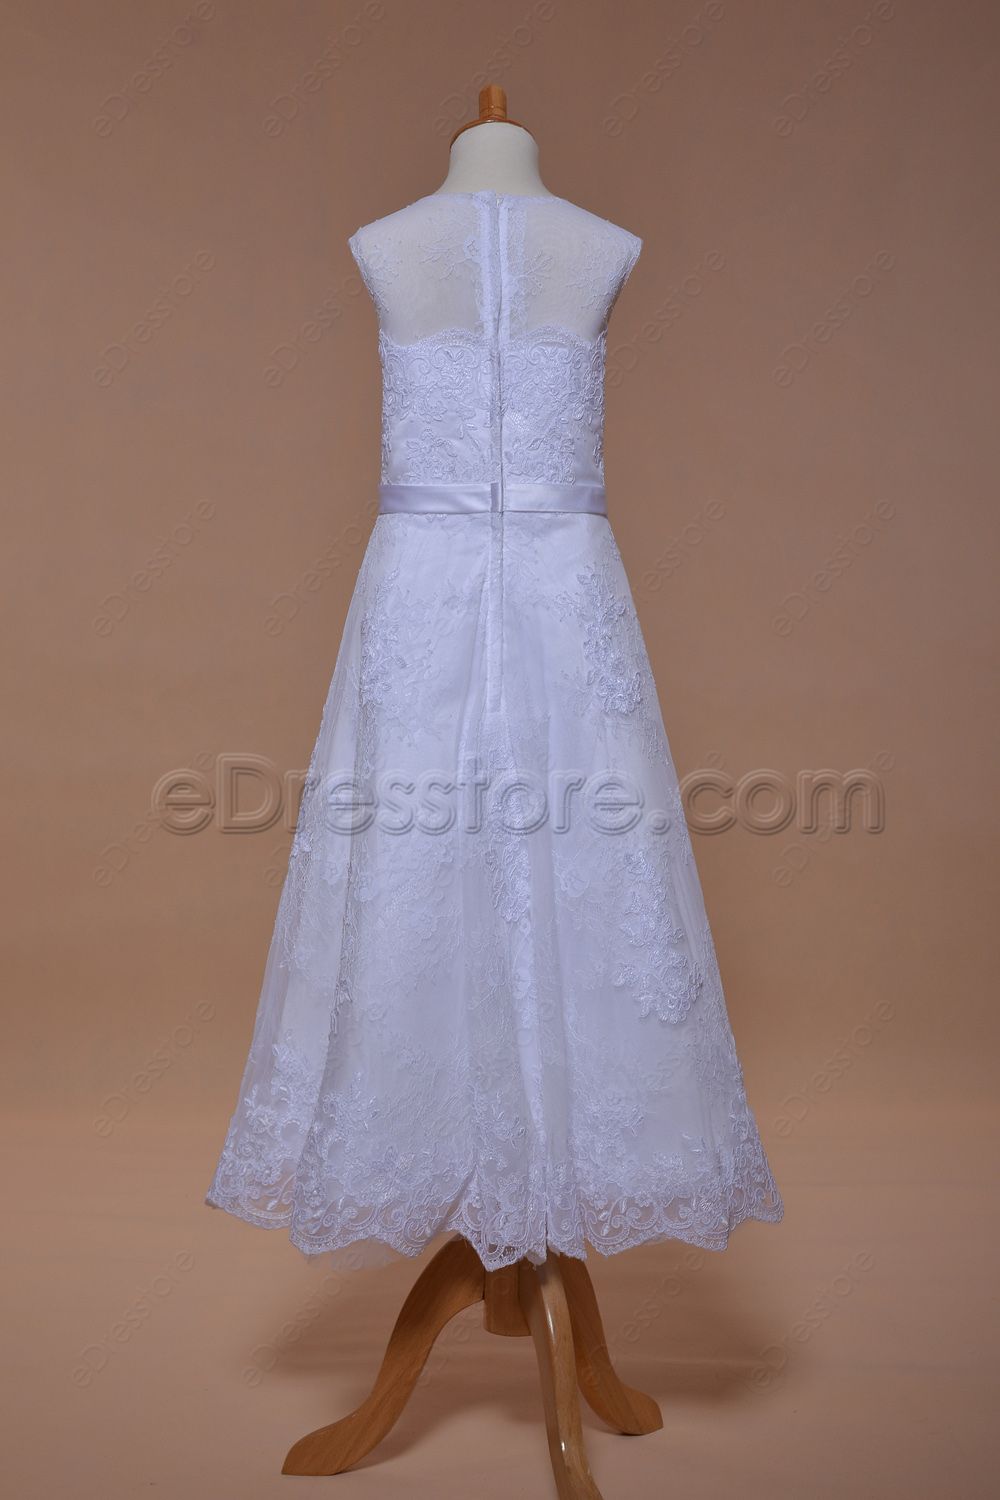 Elegant Lace A Line Holy Communion Dress Tea Length | eDresstore